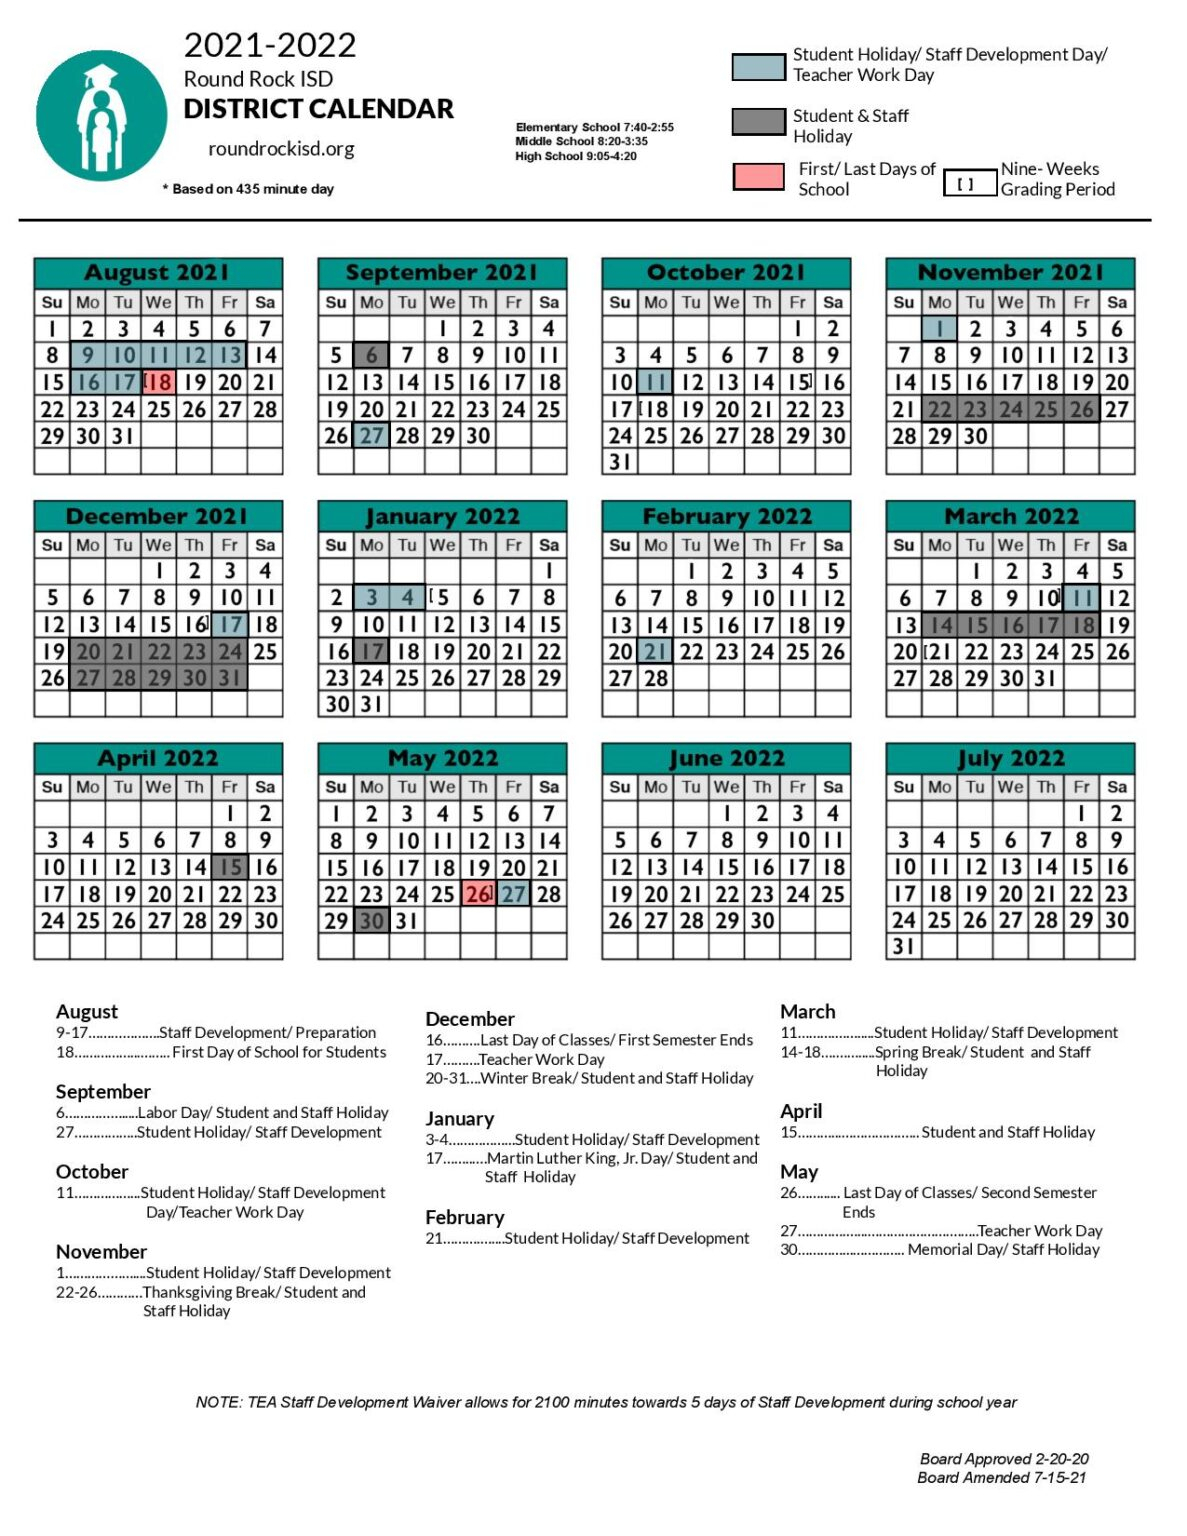 Round Rock Independent School District Calendar 2021-2022